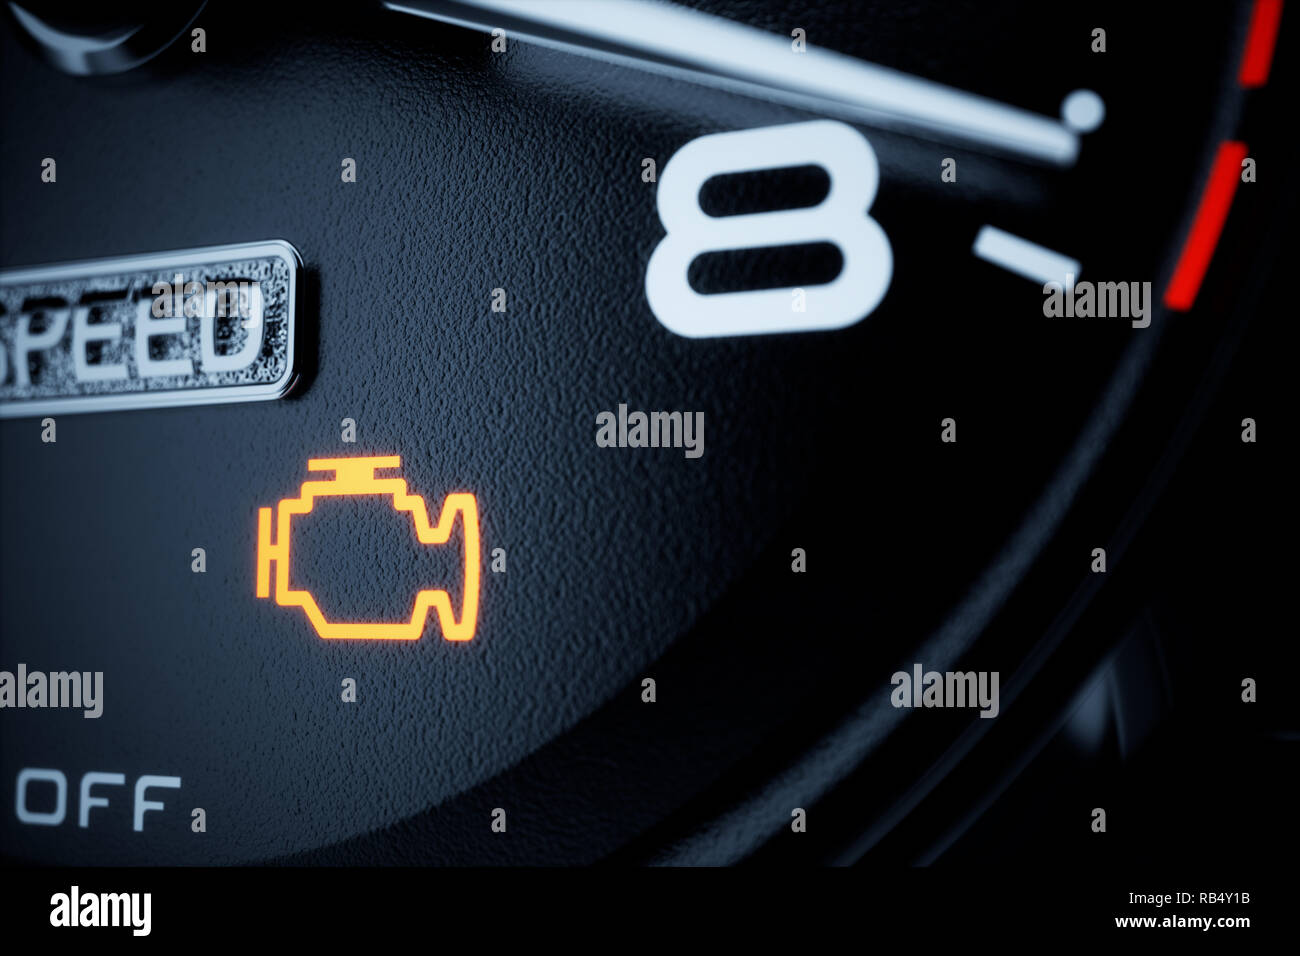 Check engine light illuminated on dashboard. 3d rendering illustration Stock Photo